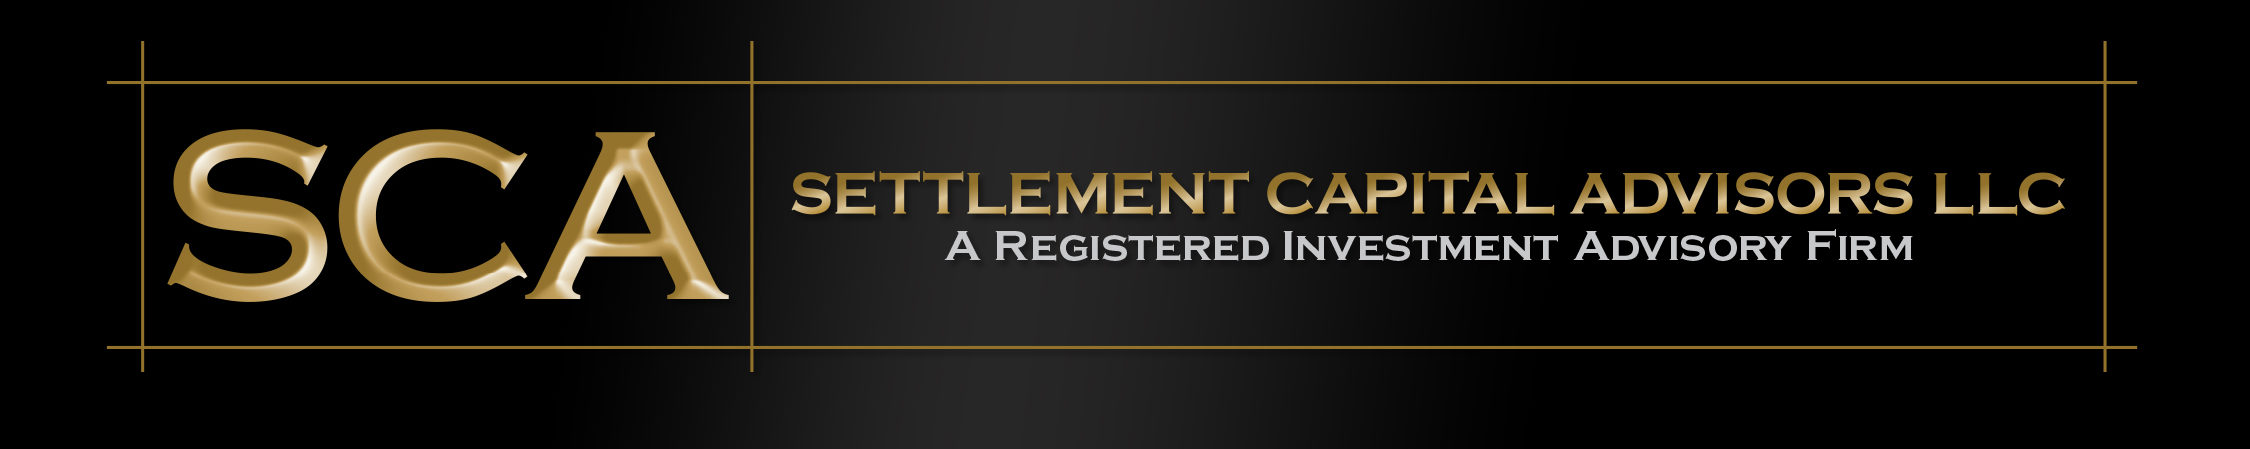 Who We Serve - Settlement Capital Advisors LLC